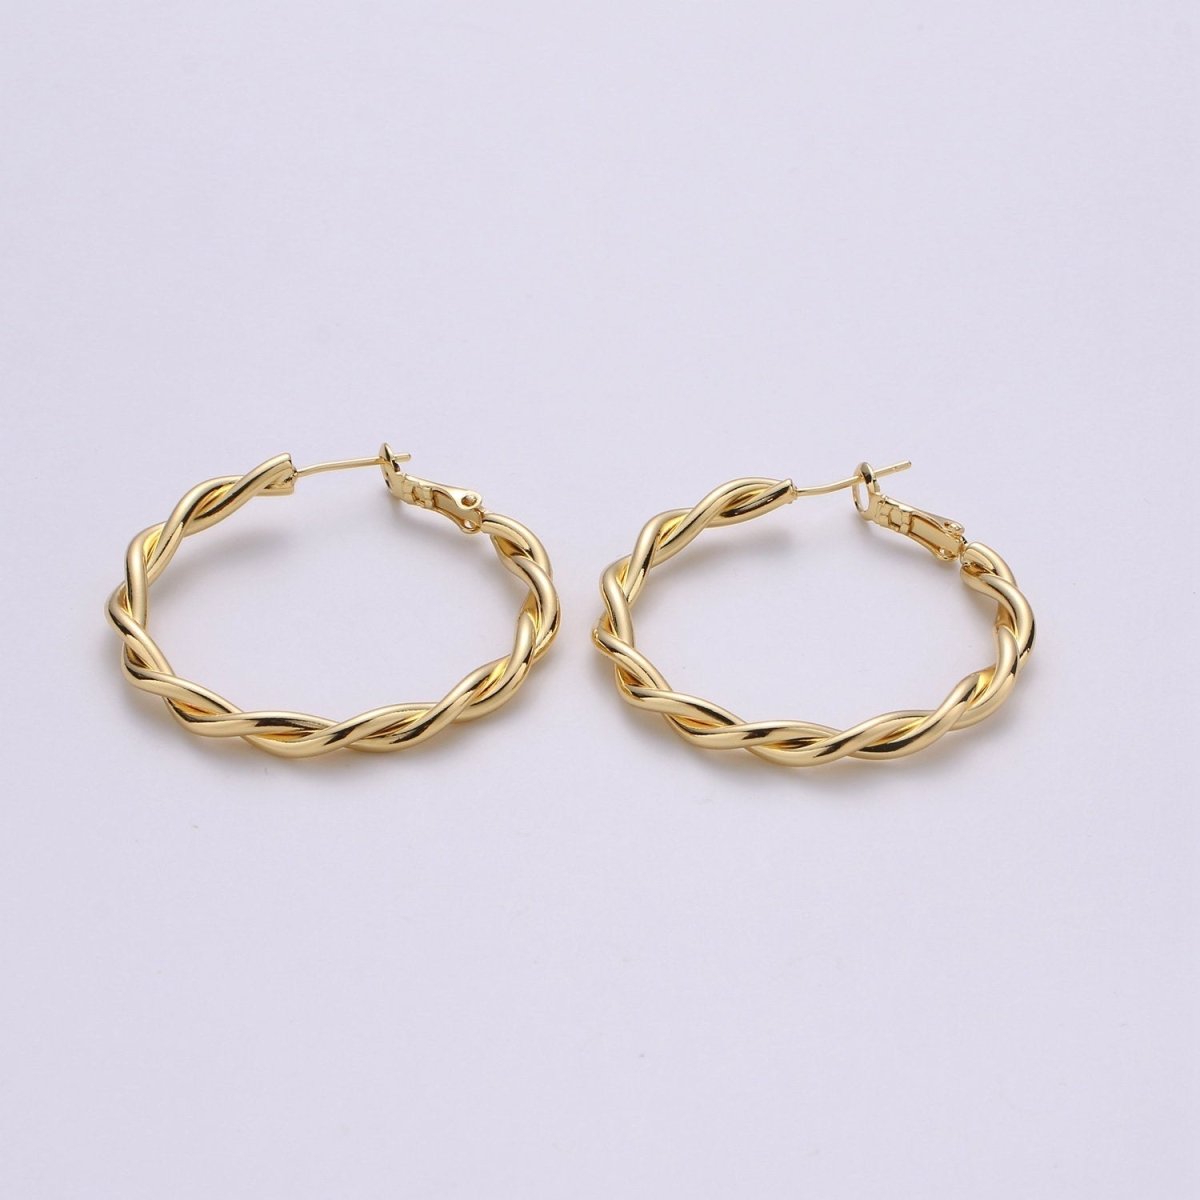 24k Vermeil Gold Earrings, Hoop Earrings, Medium Hoop, Twisted Rope Texture Earring, Gift for Her, Earrings for Women, Everyday Wear Earring Q-213 - DLUXCA